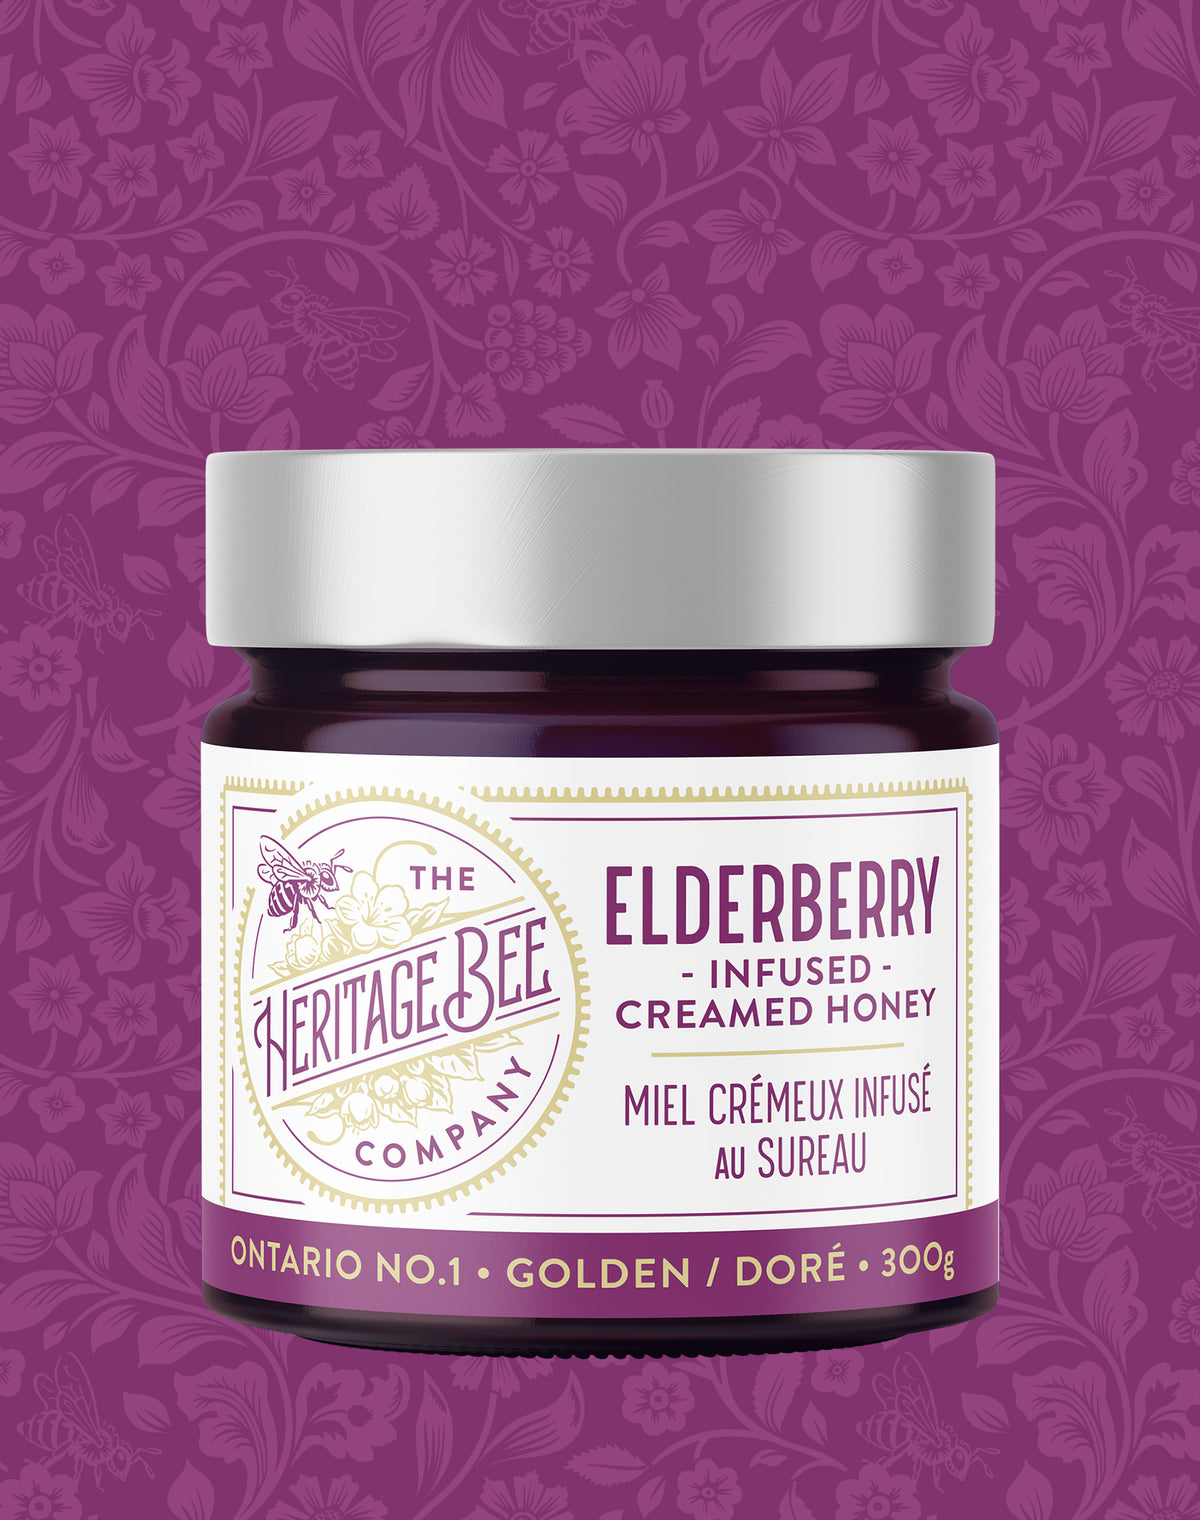 Heritage Bee Co's gourmet creamed wildflower honey infused with elderberry. Handcrafted locally in Ontario.